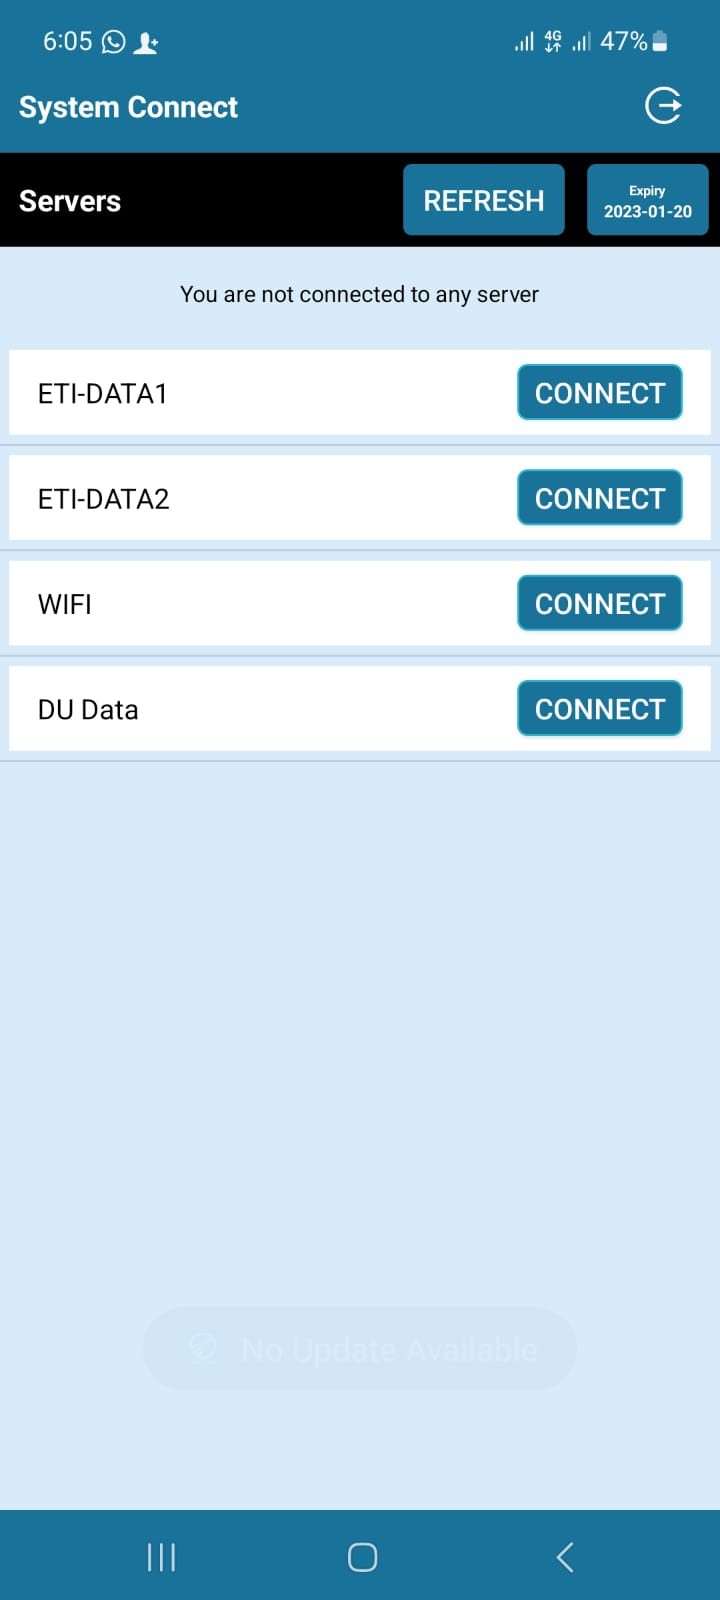 System Connect VPN For UAE Dubai 2